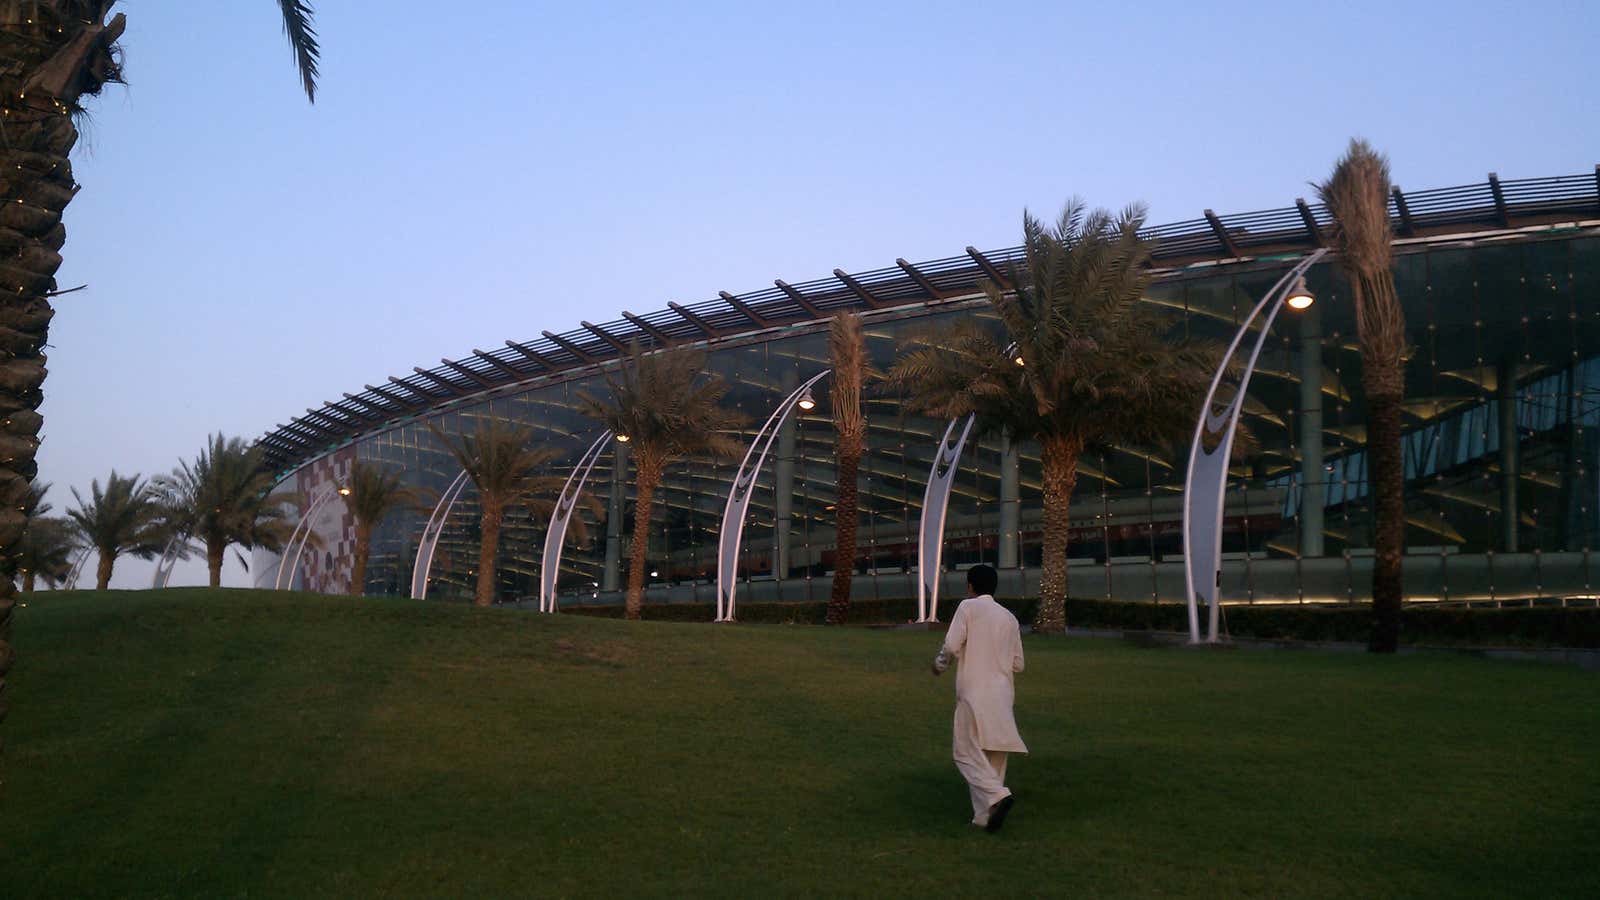 A man walks in front of the Mall of Arabia in Jeddah, Saudi Arabia.